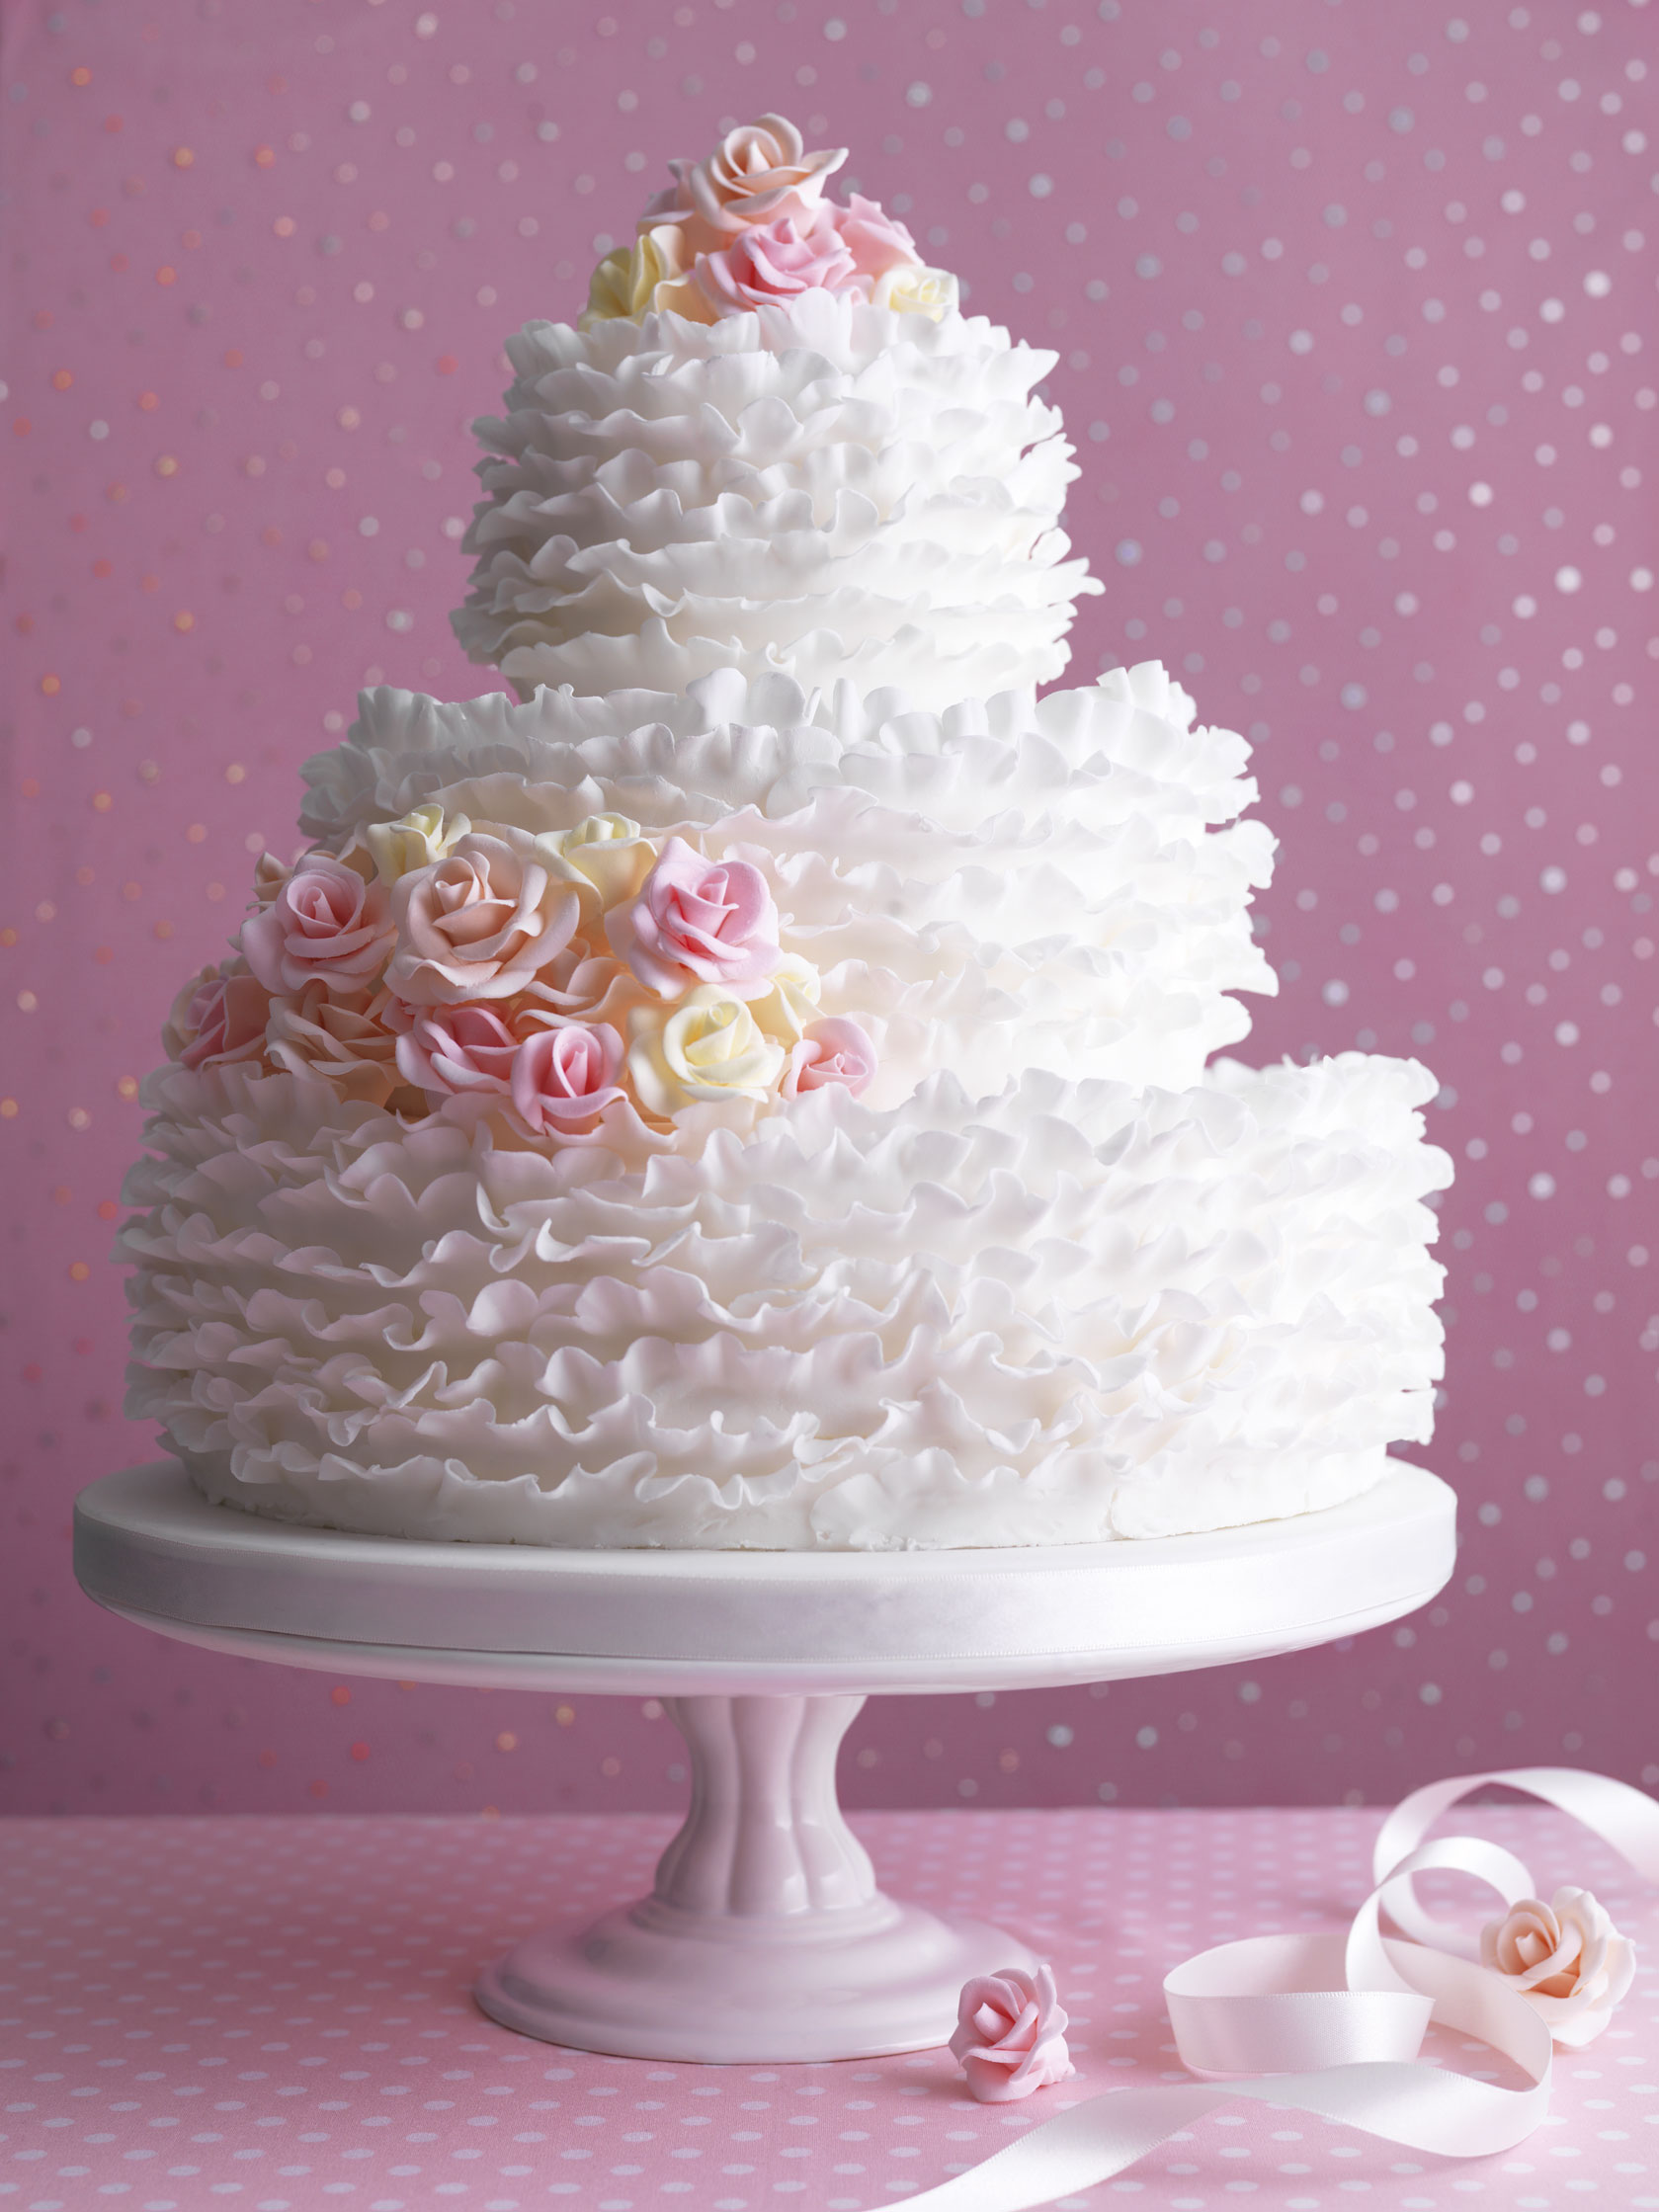 How to Make Wedding Cakes